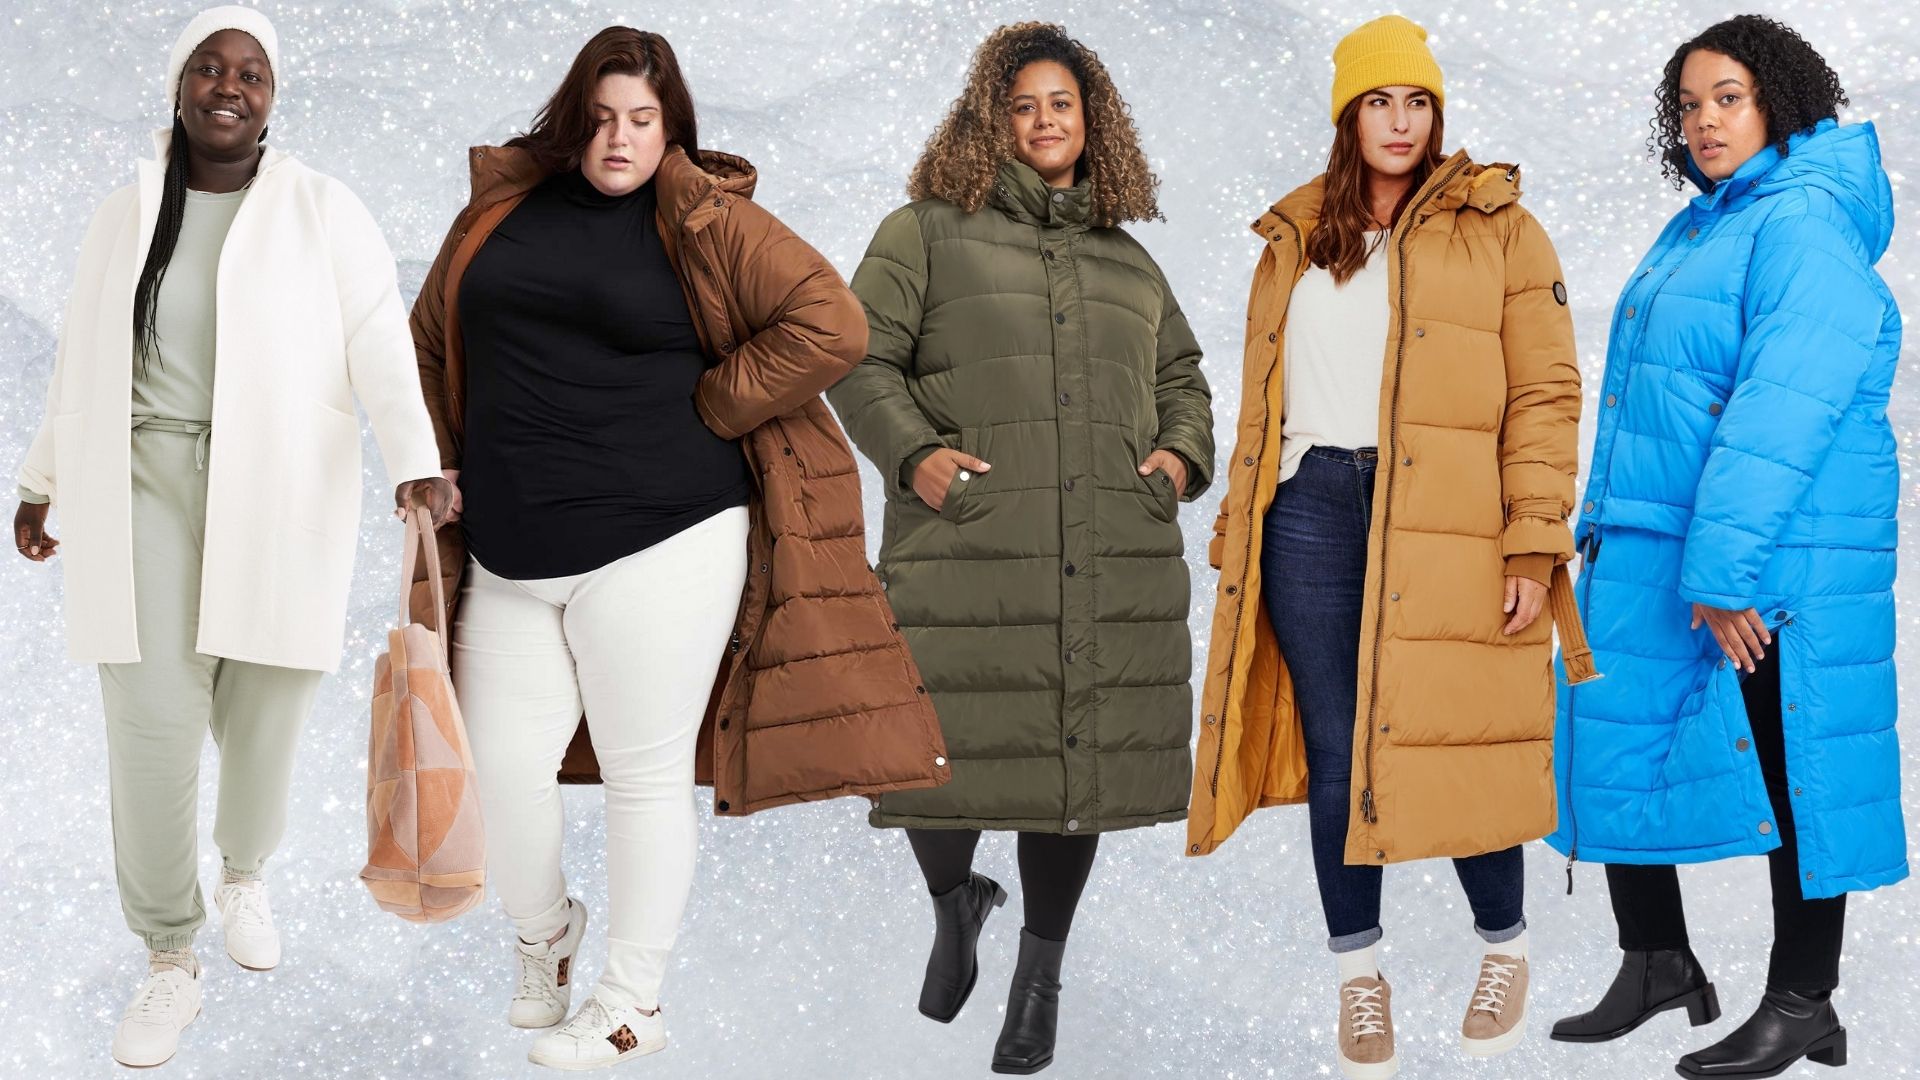 LISTHA Winter Coat Women Big Collar Fur Outerwear Outercoat Warm Casual Jackets